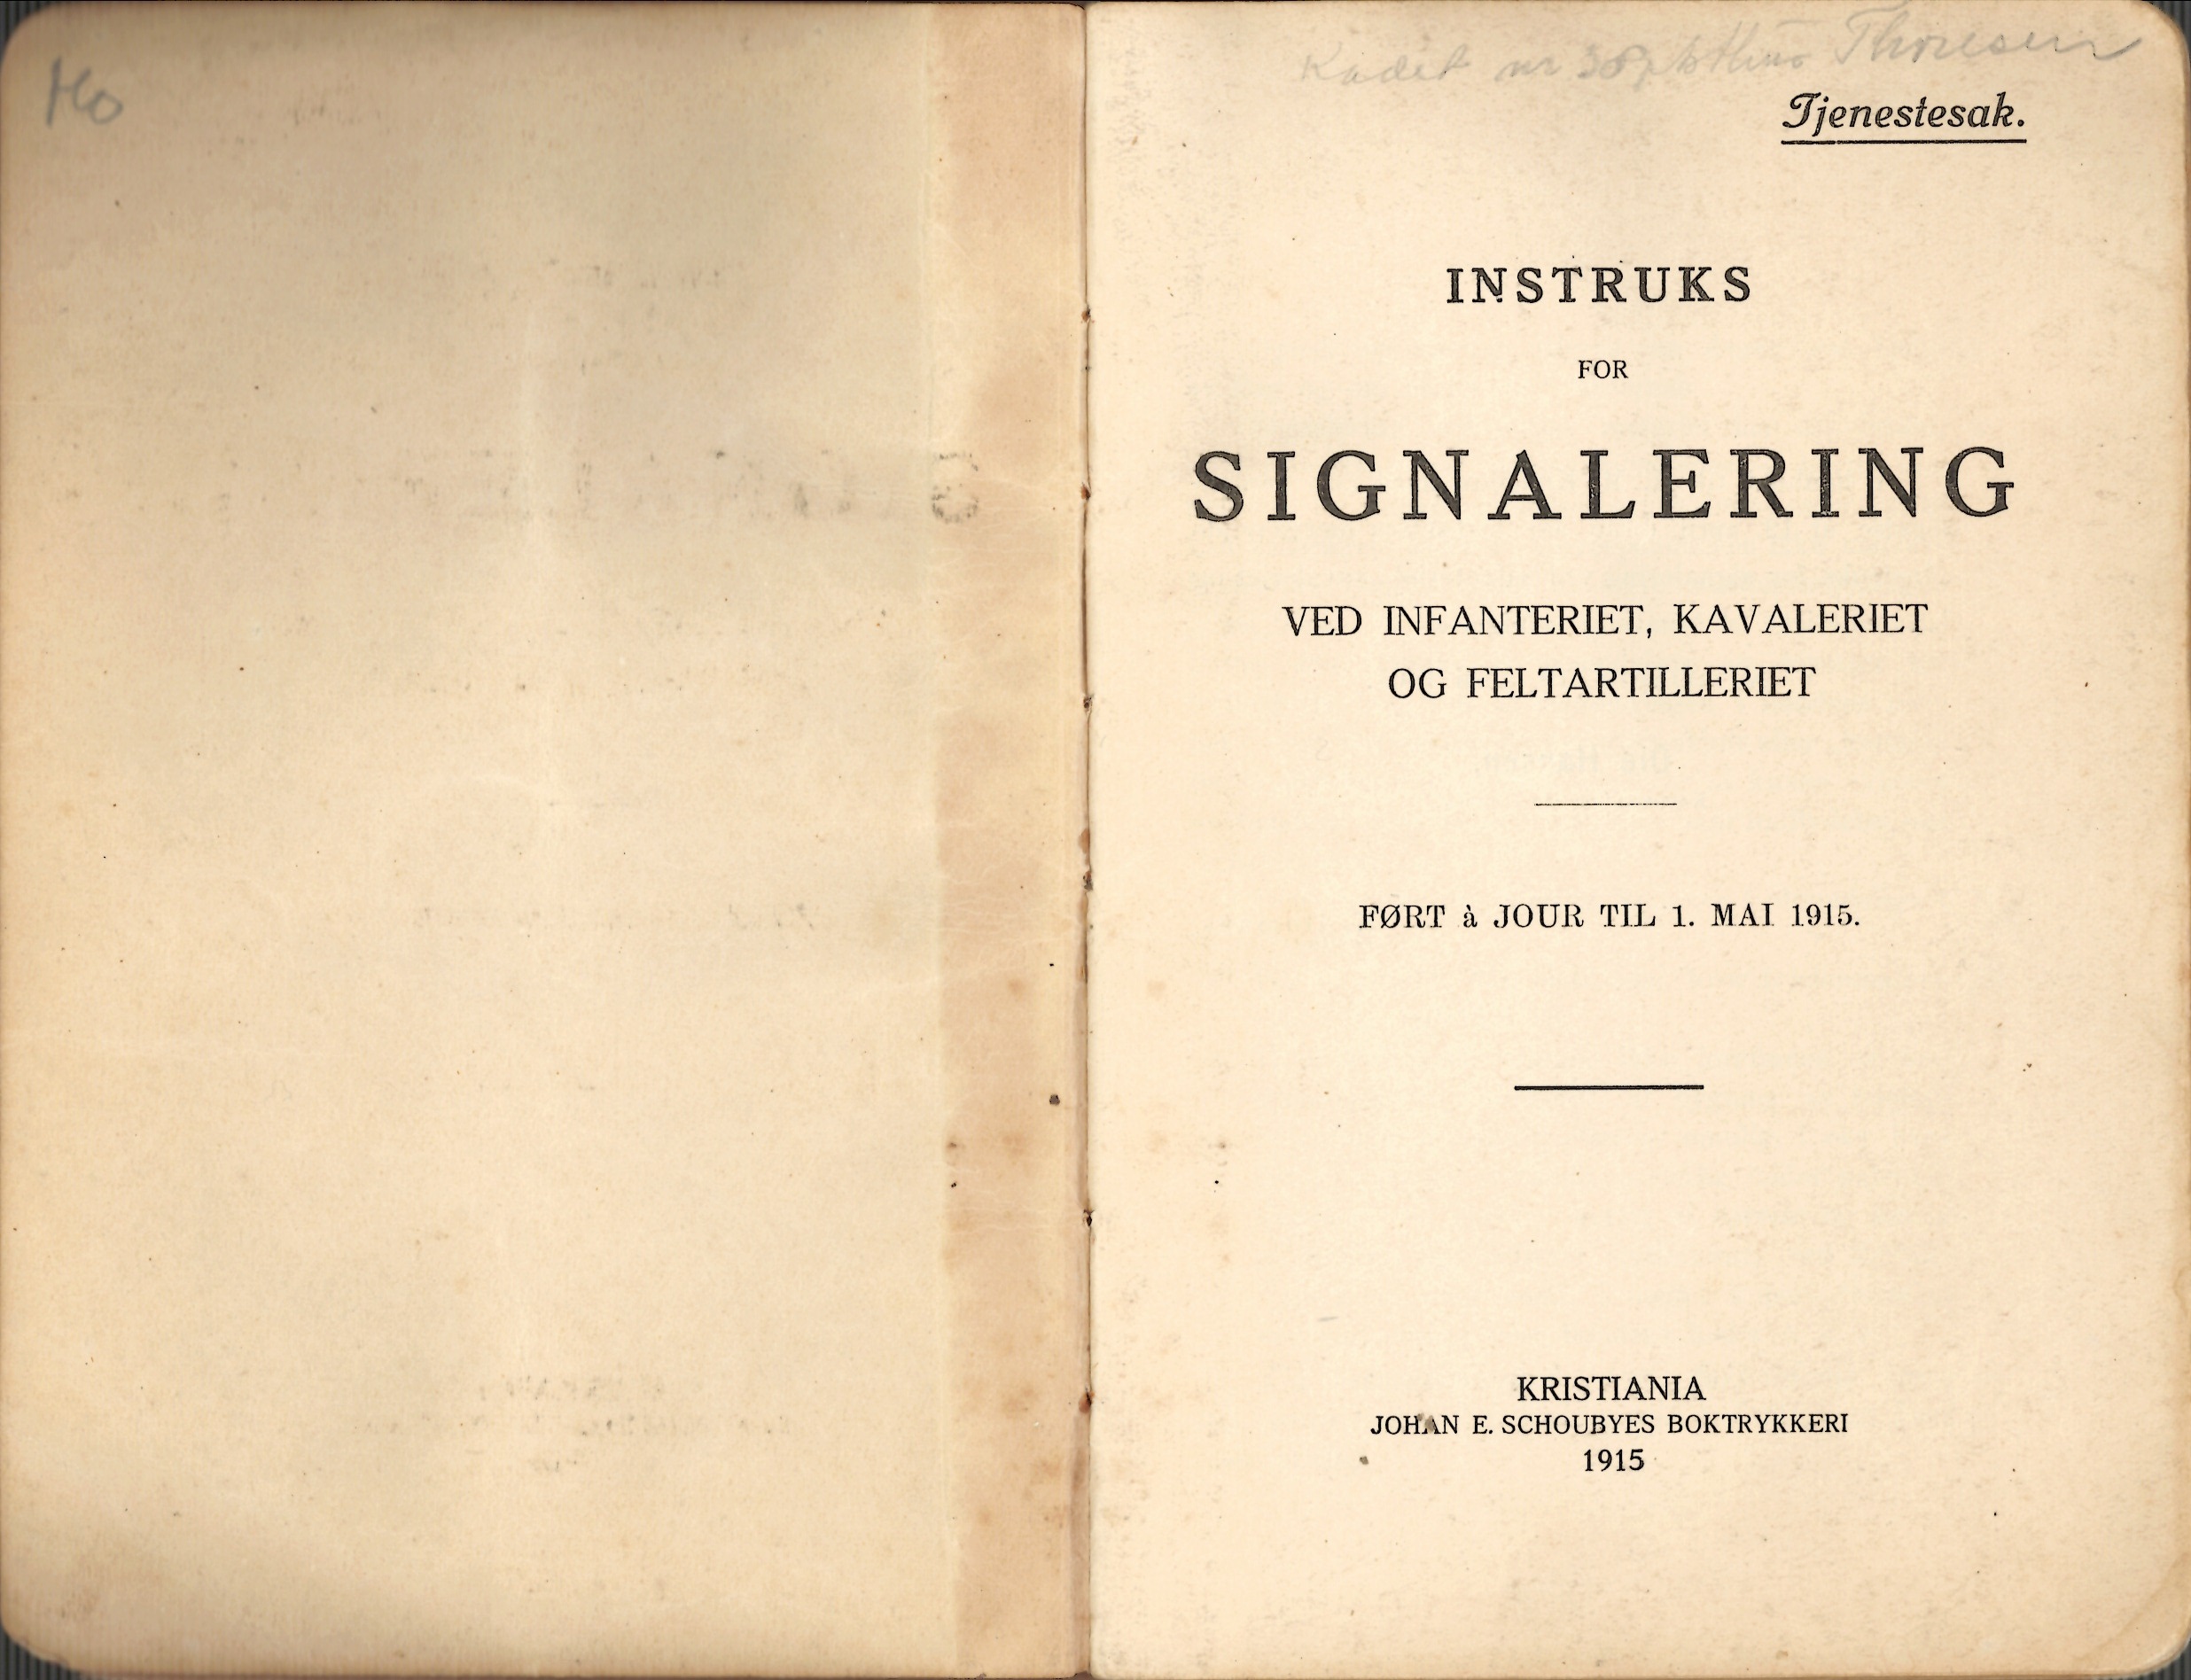 ./doc/reglement/Signal/Instruks-Signalering-1915-2.jpg